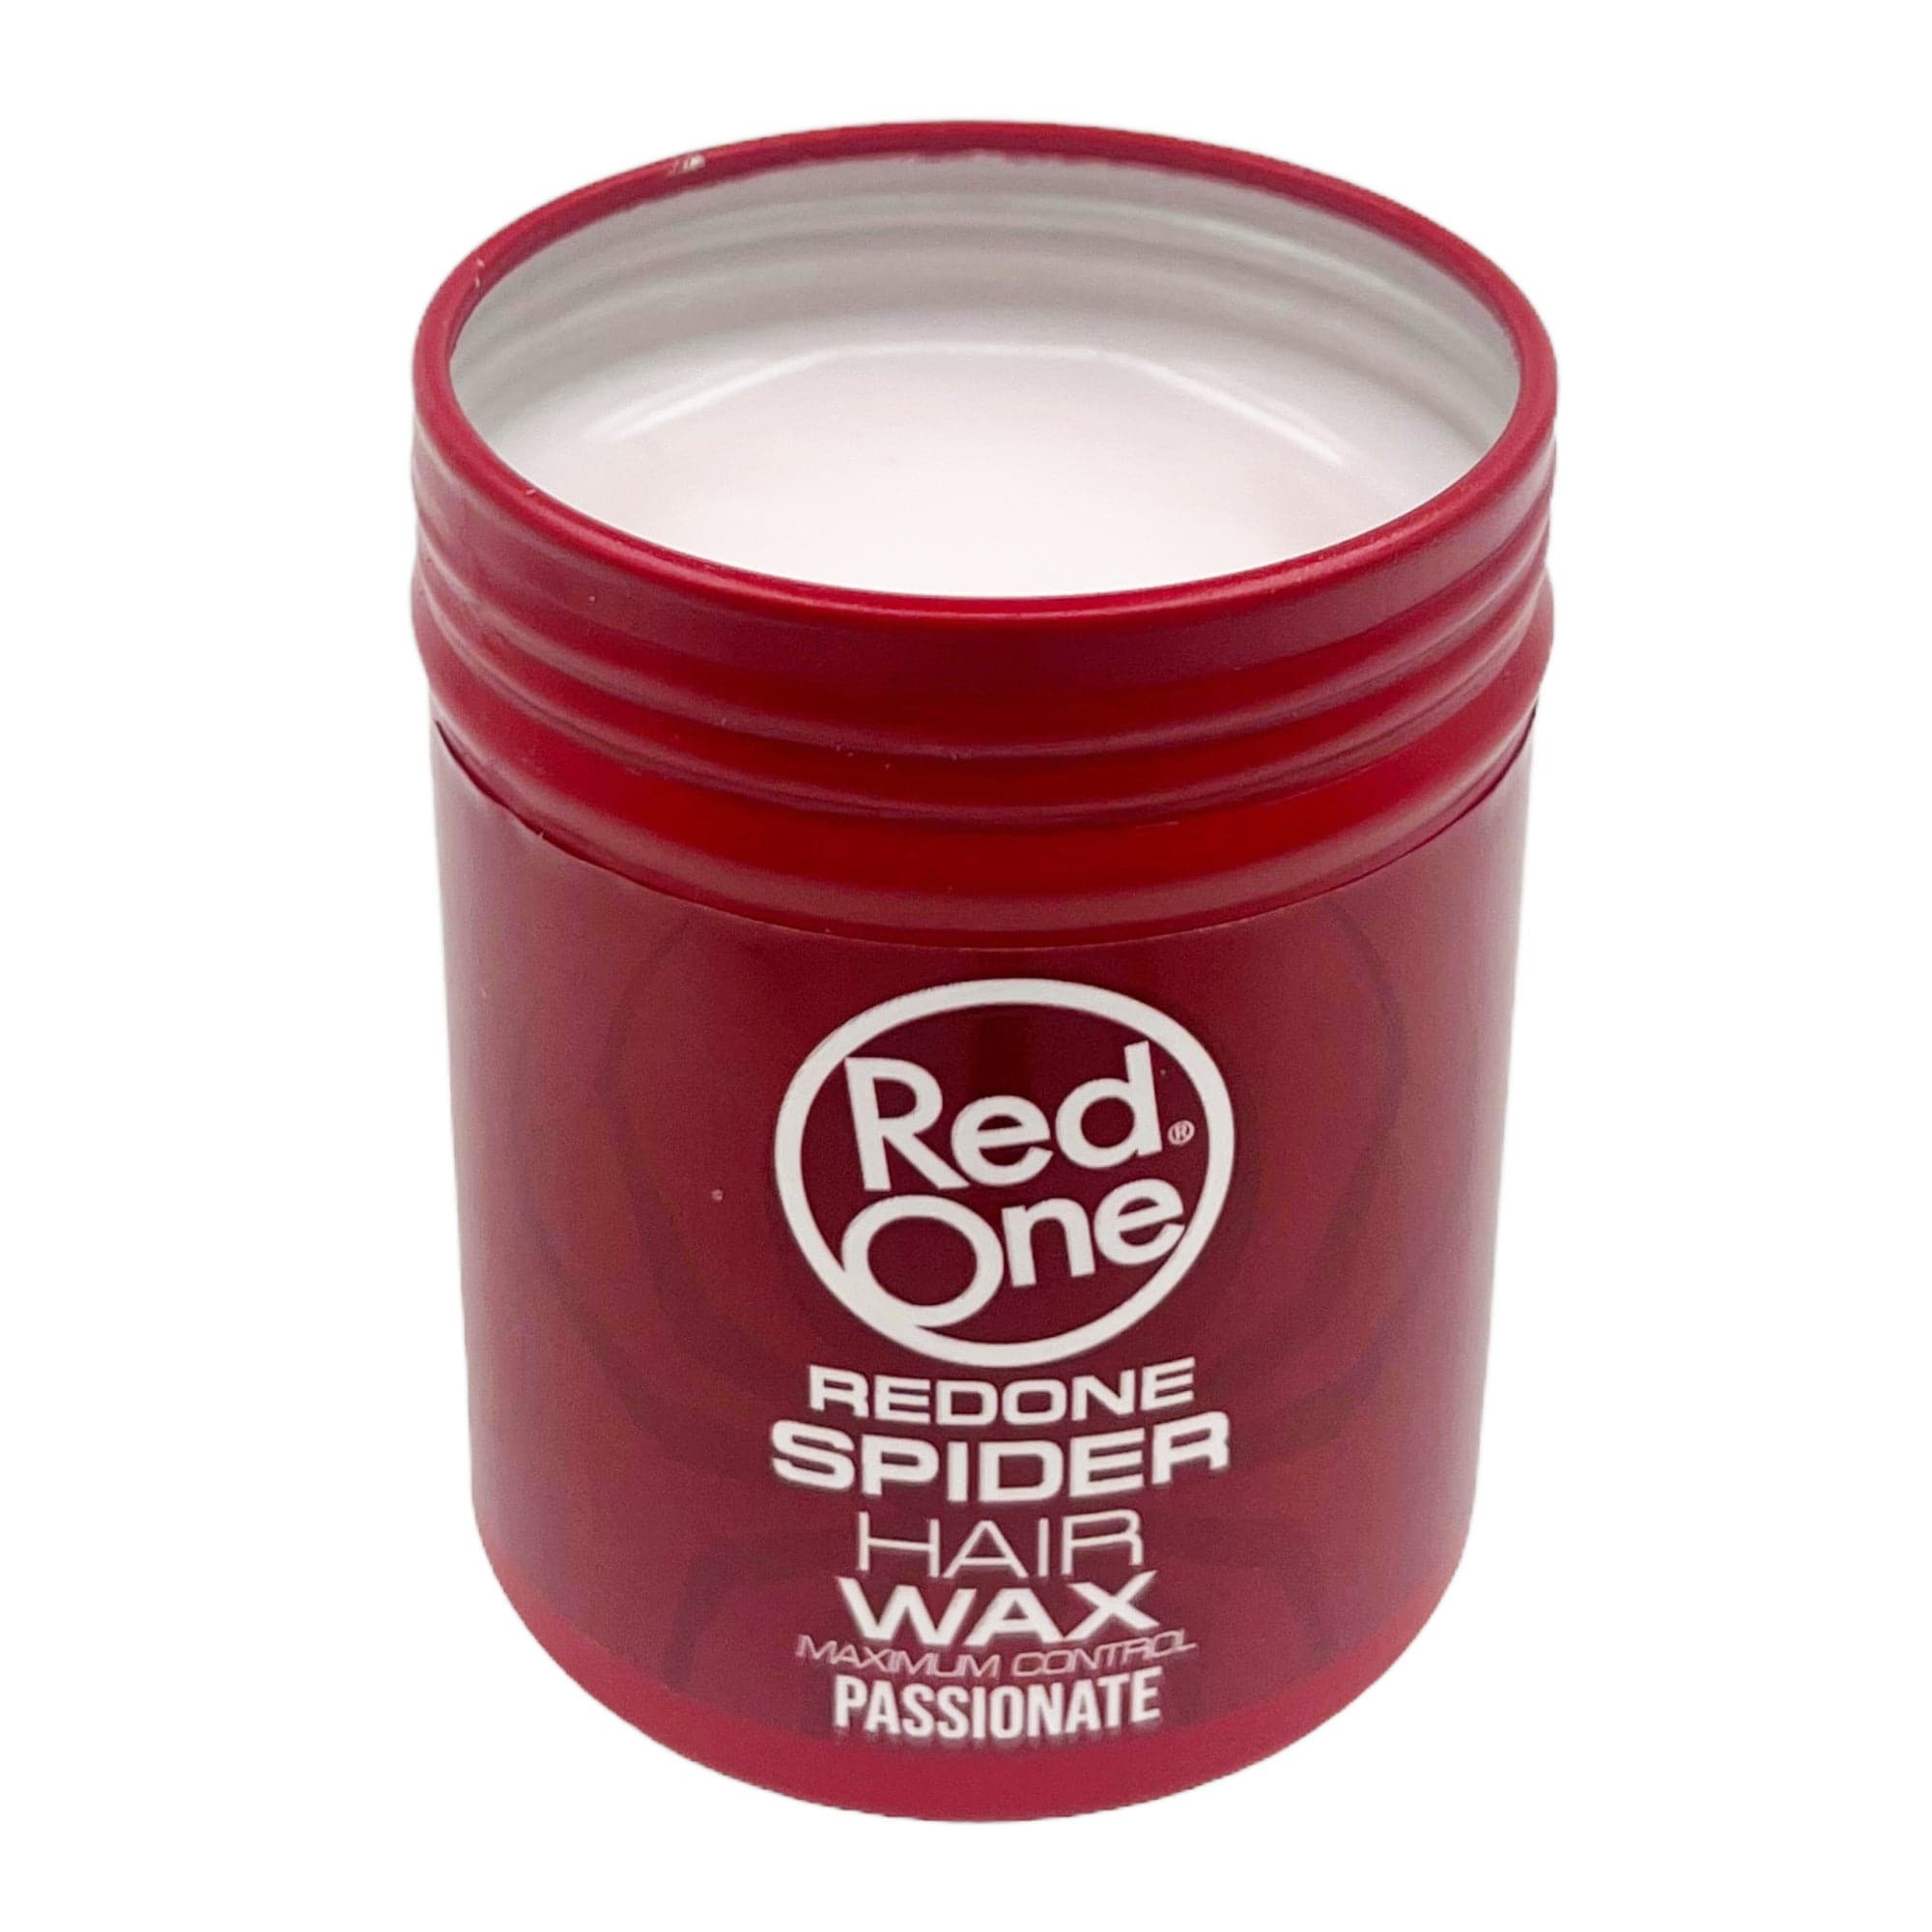 Redone - Spider Hair Wax Passionate Maximum Control 100ml